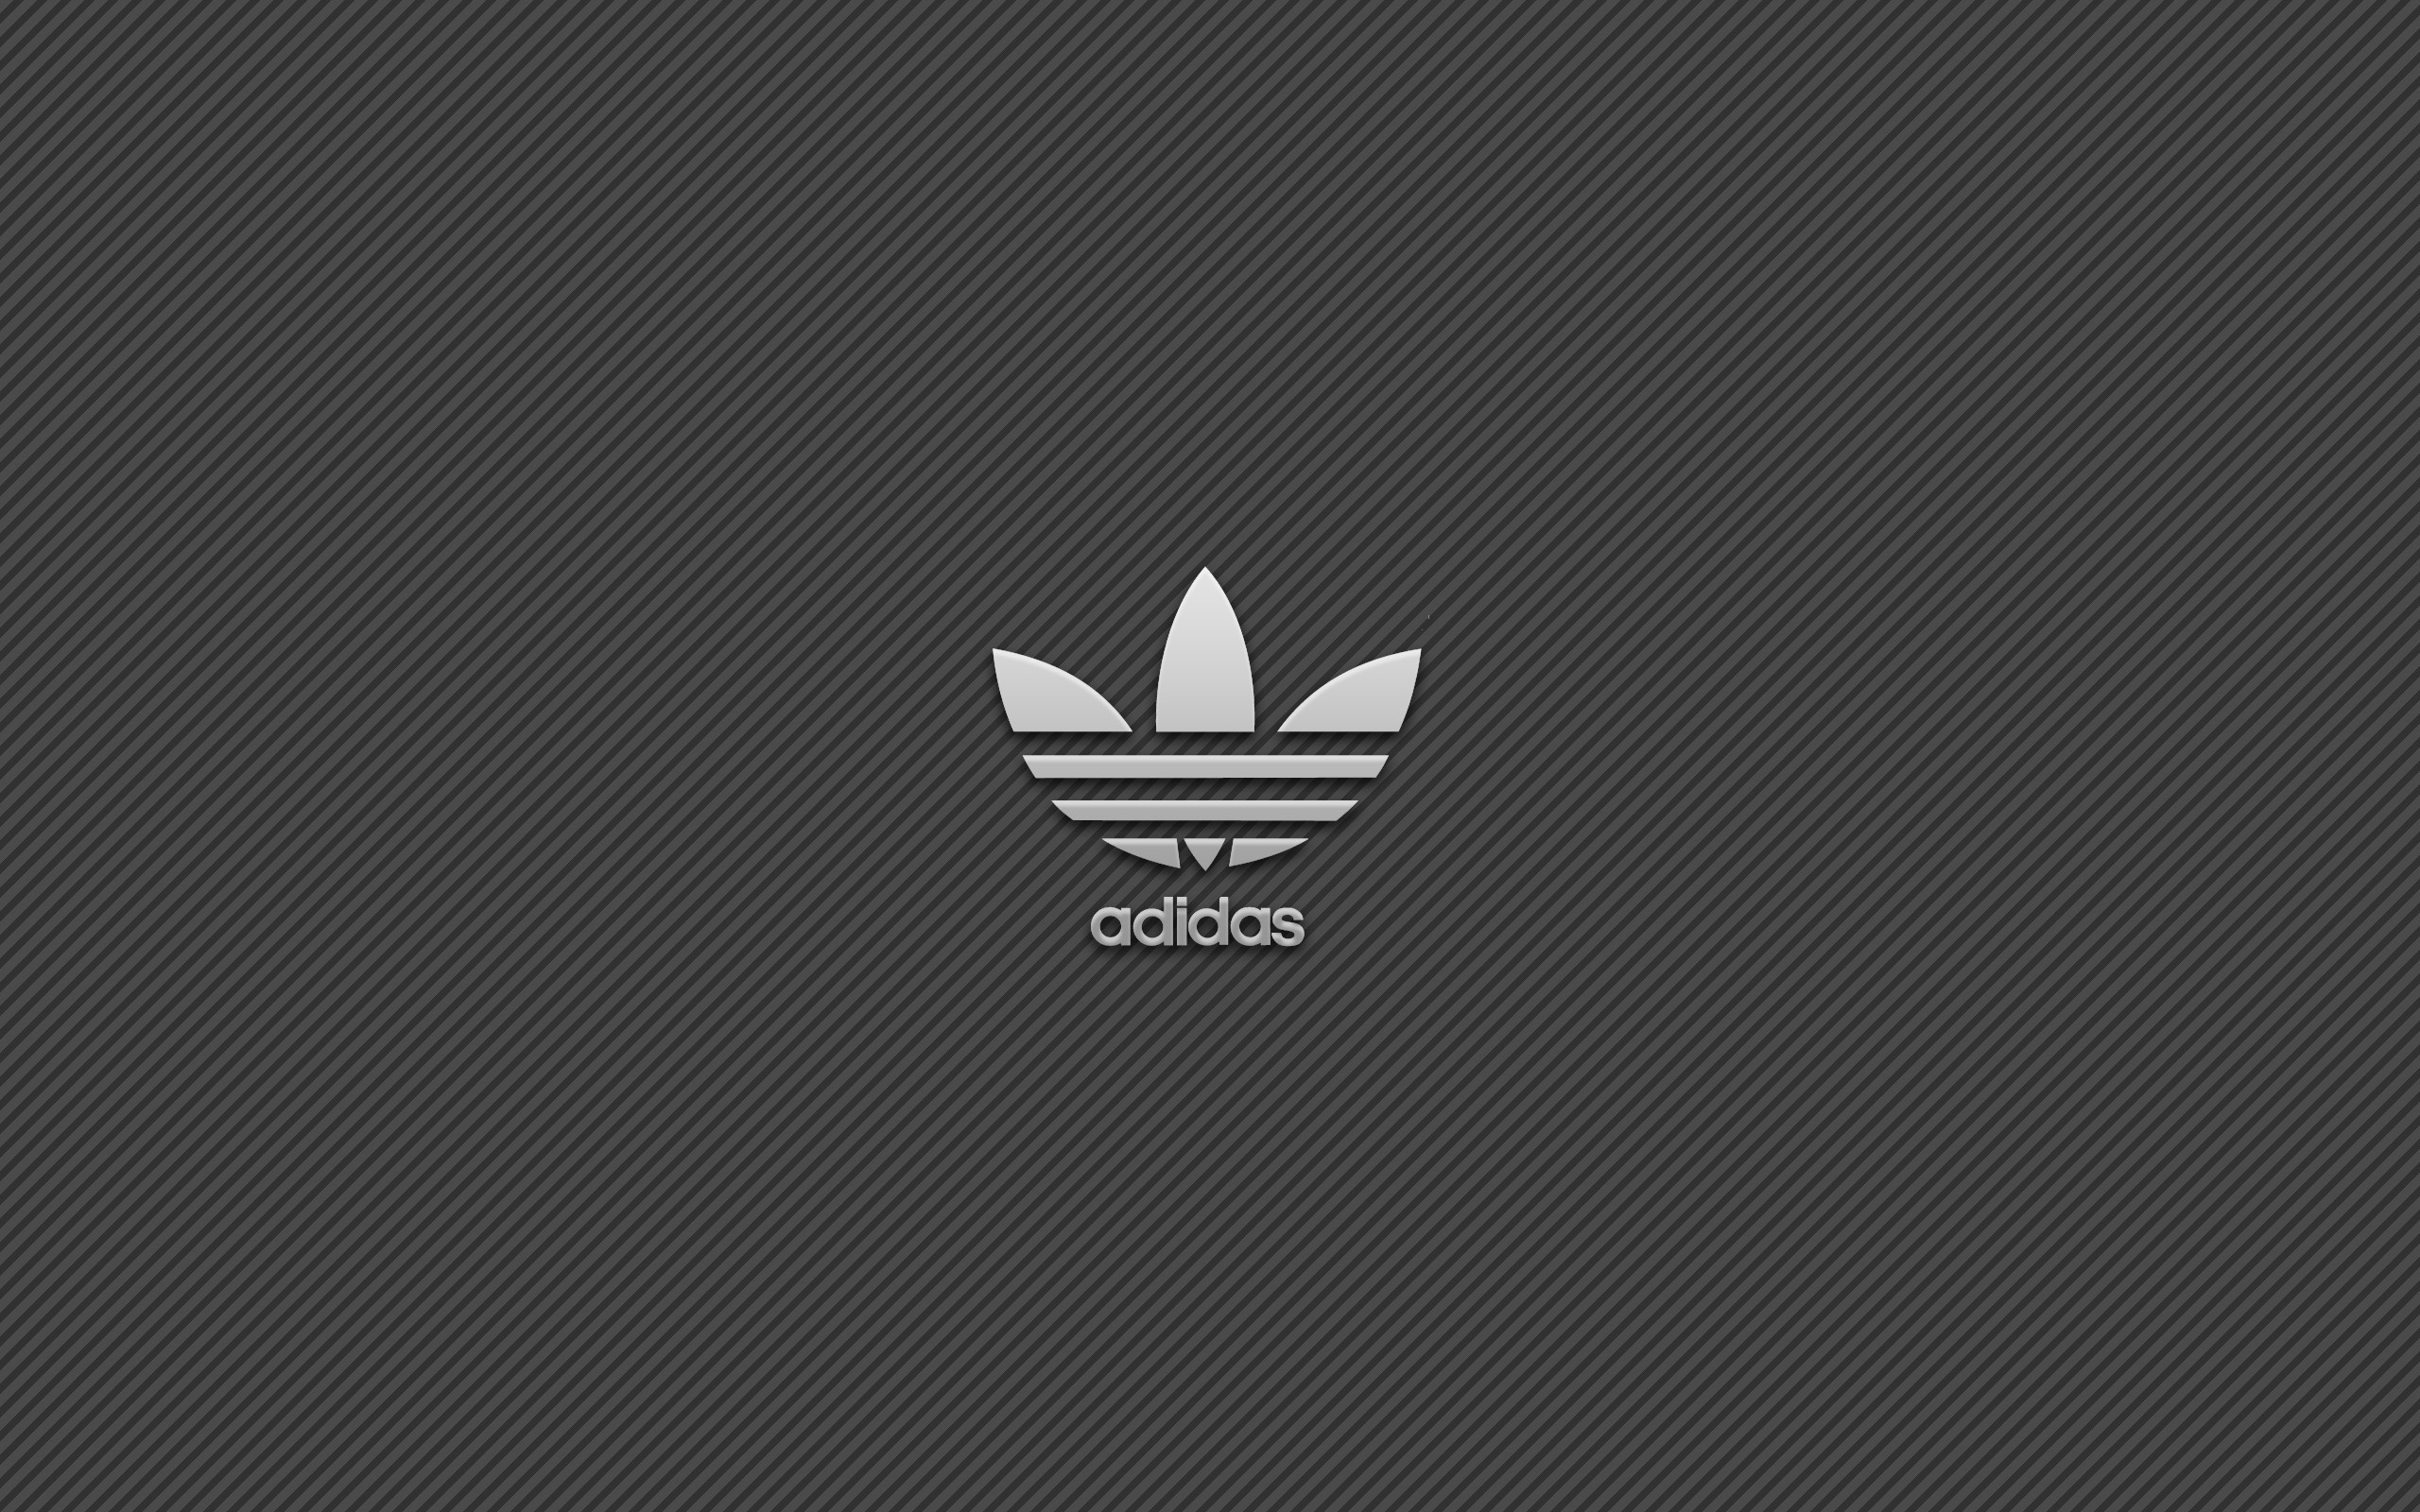 Adidas Simple Logo Background   2560x1600   1489786